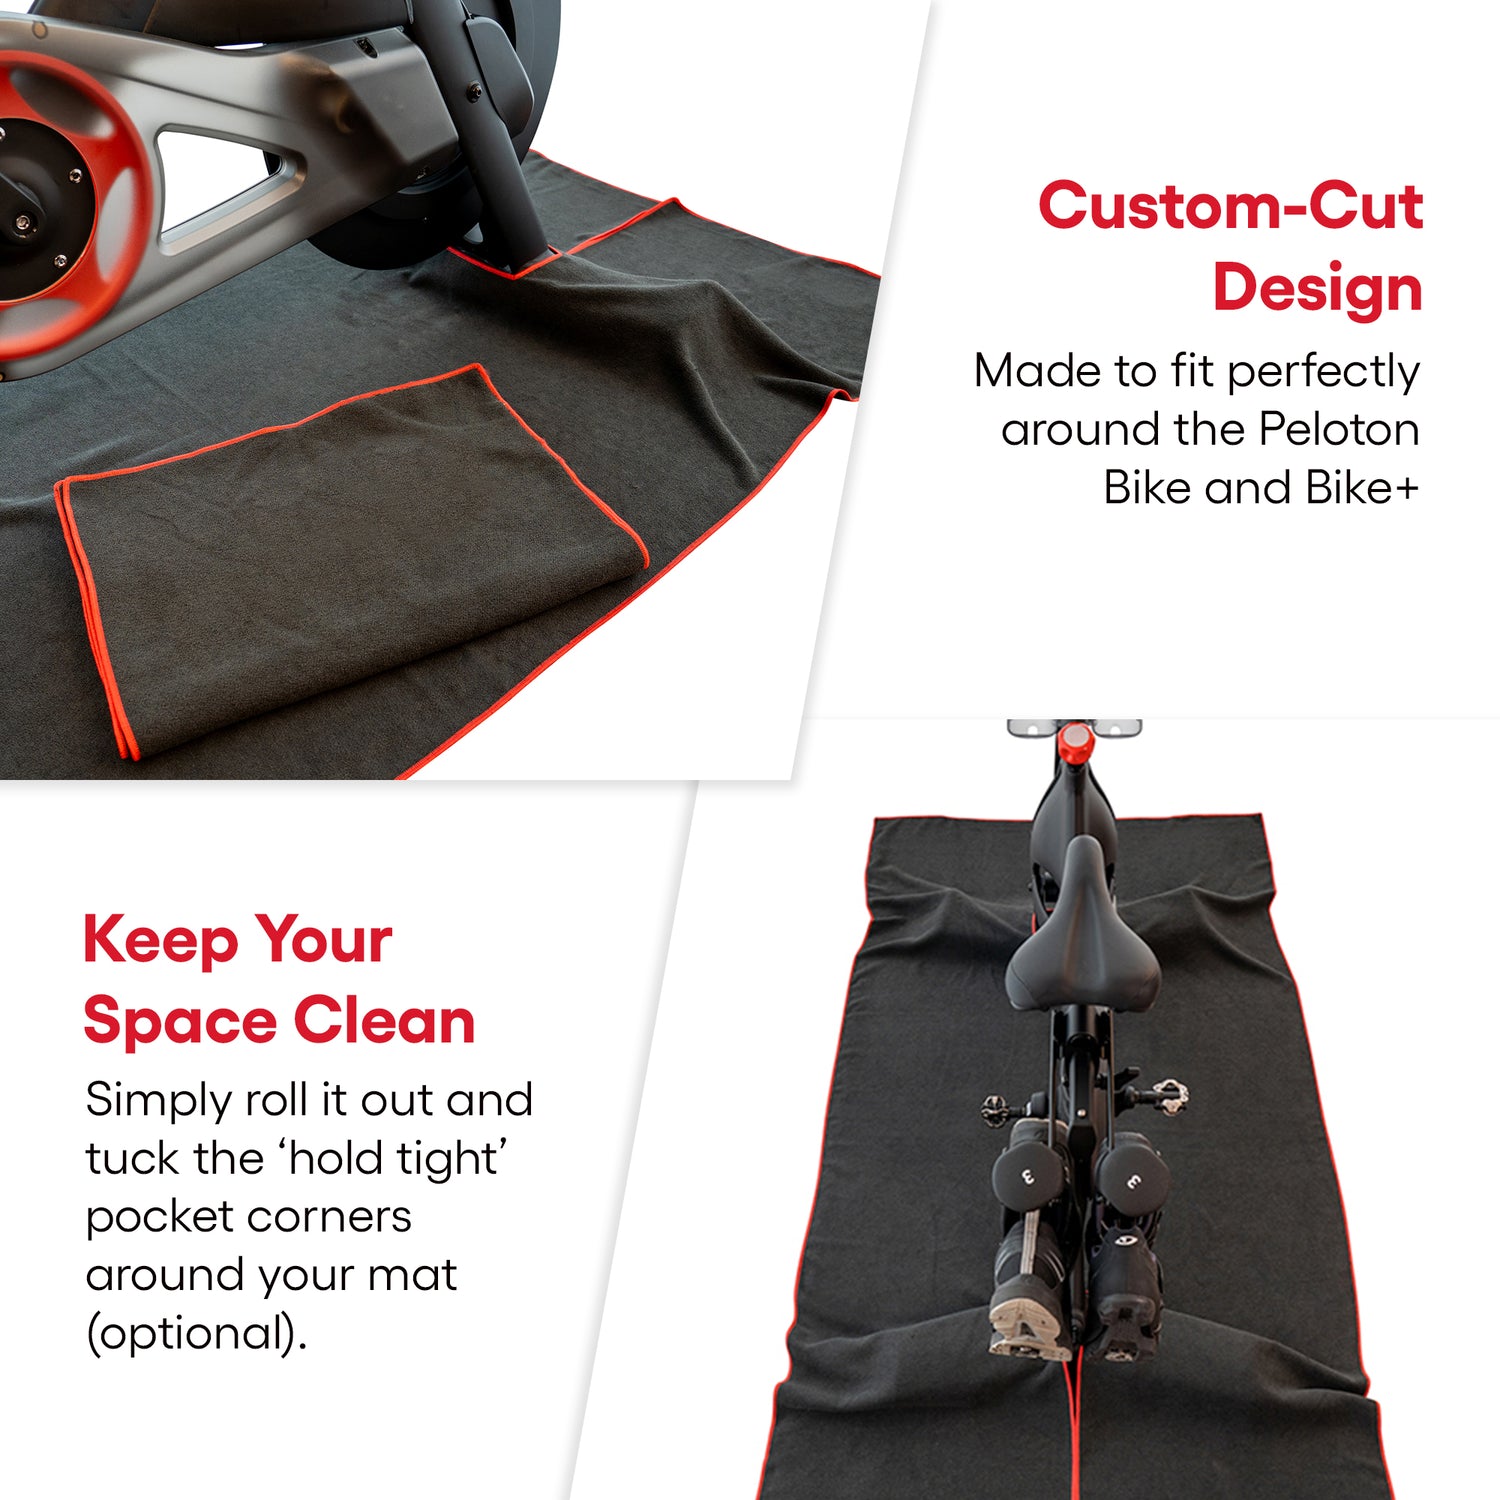 Peloton bike mat keeps your space clean